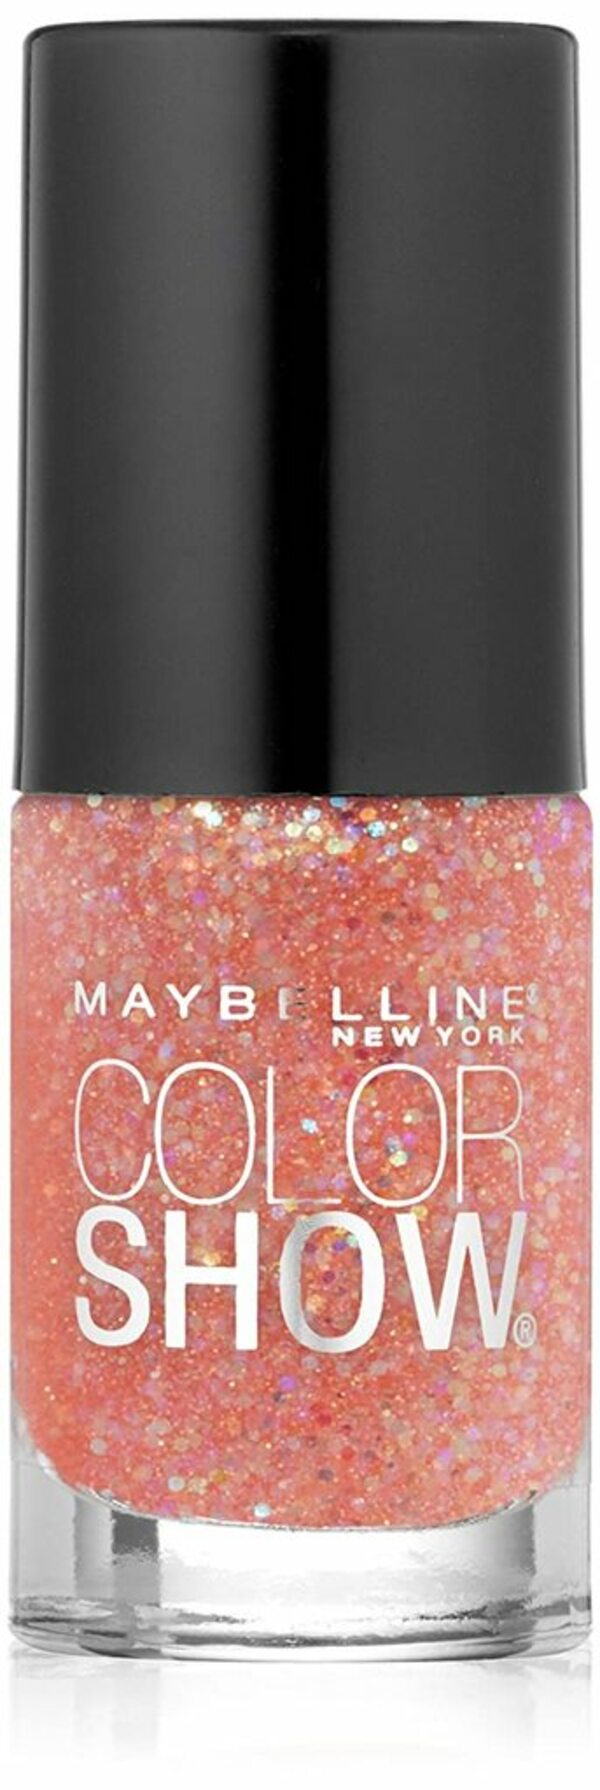 Nail polish swatch / manicure of shade Maybelline Punk Rock Pink